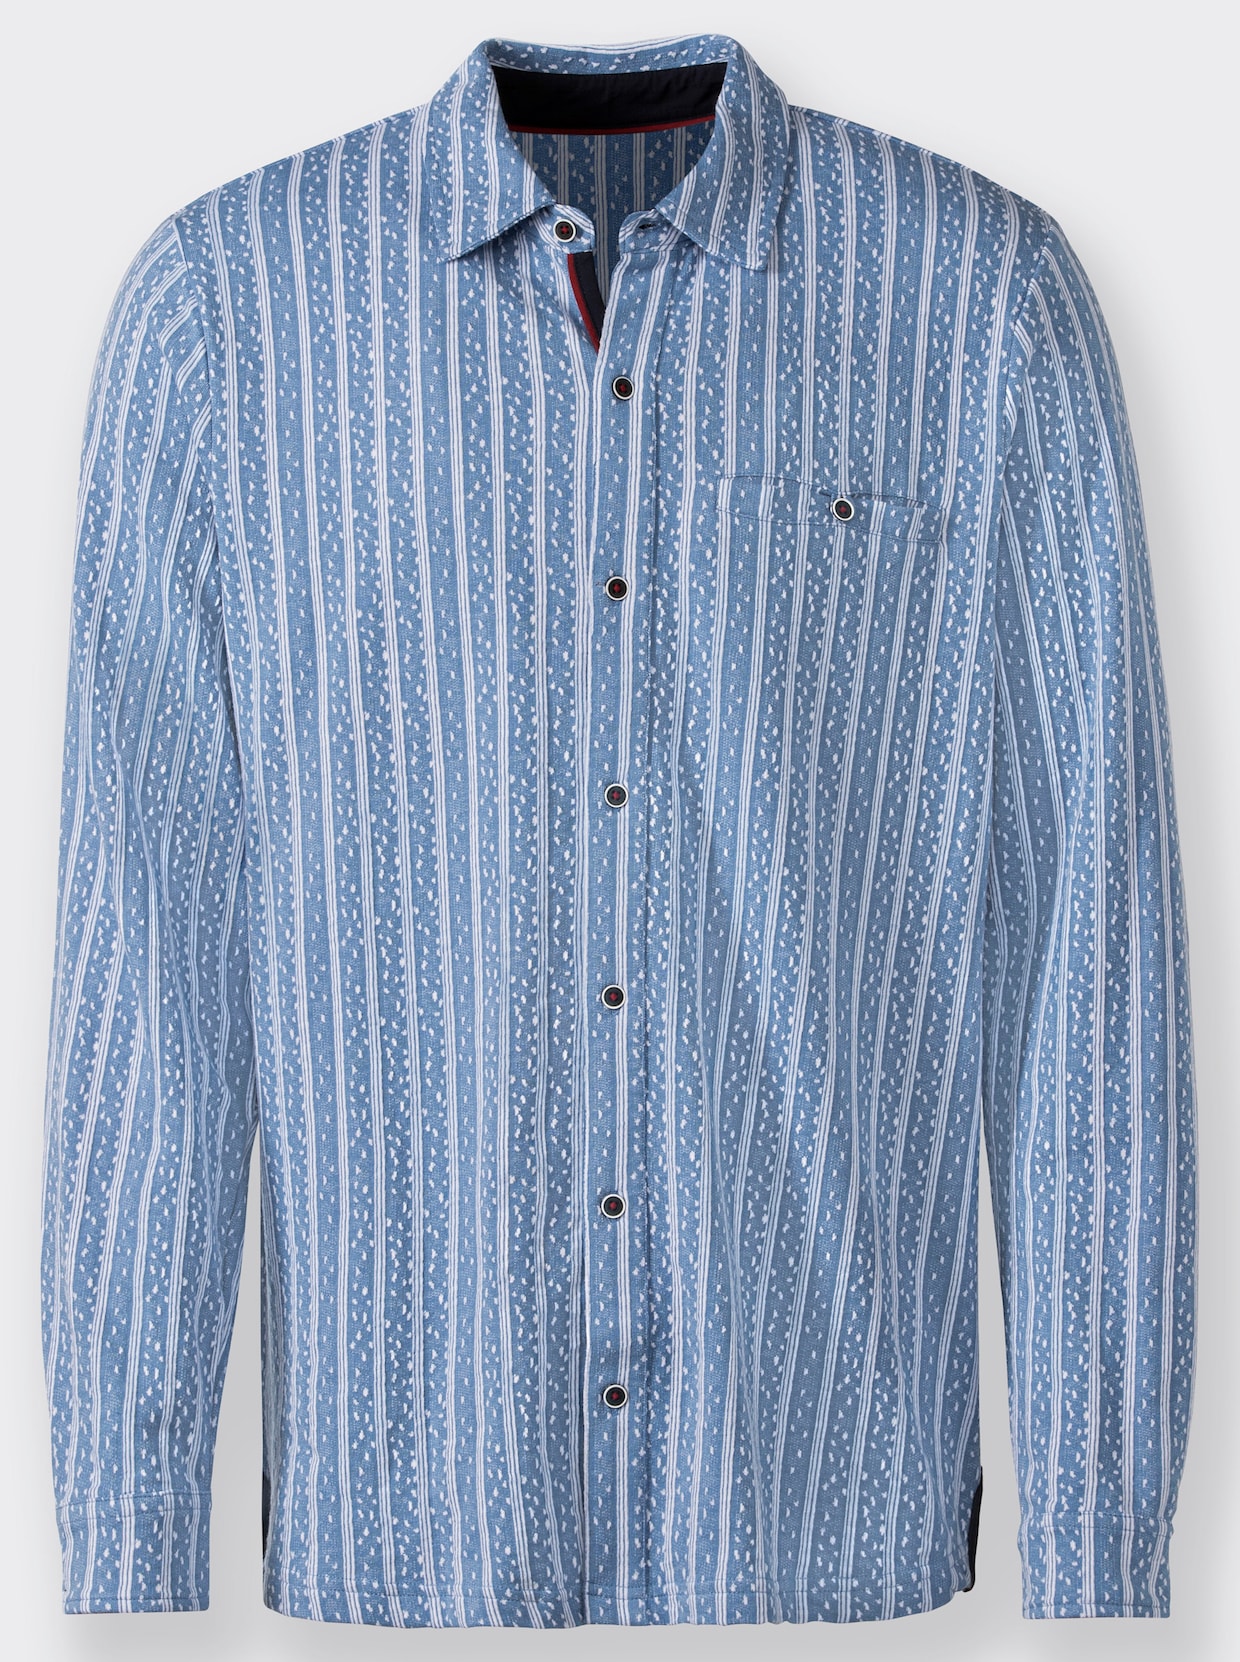 Marco Donati Jerseyhemd - medium blauw gestreept